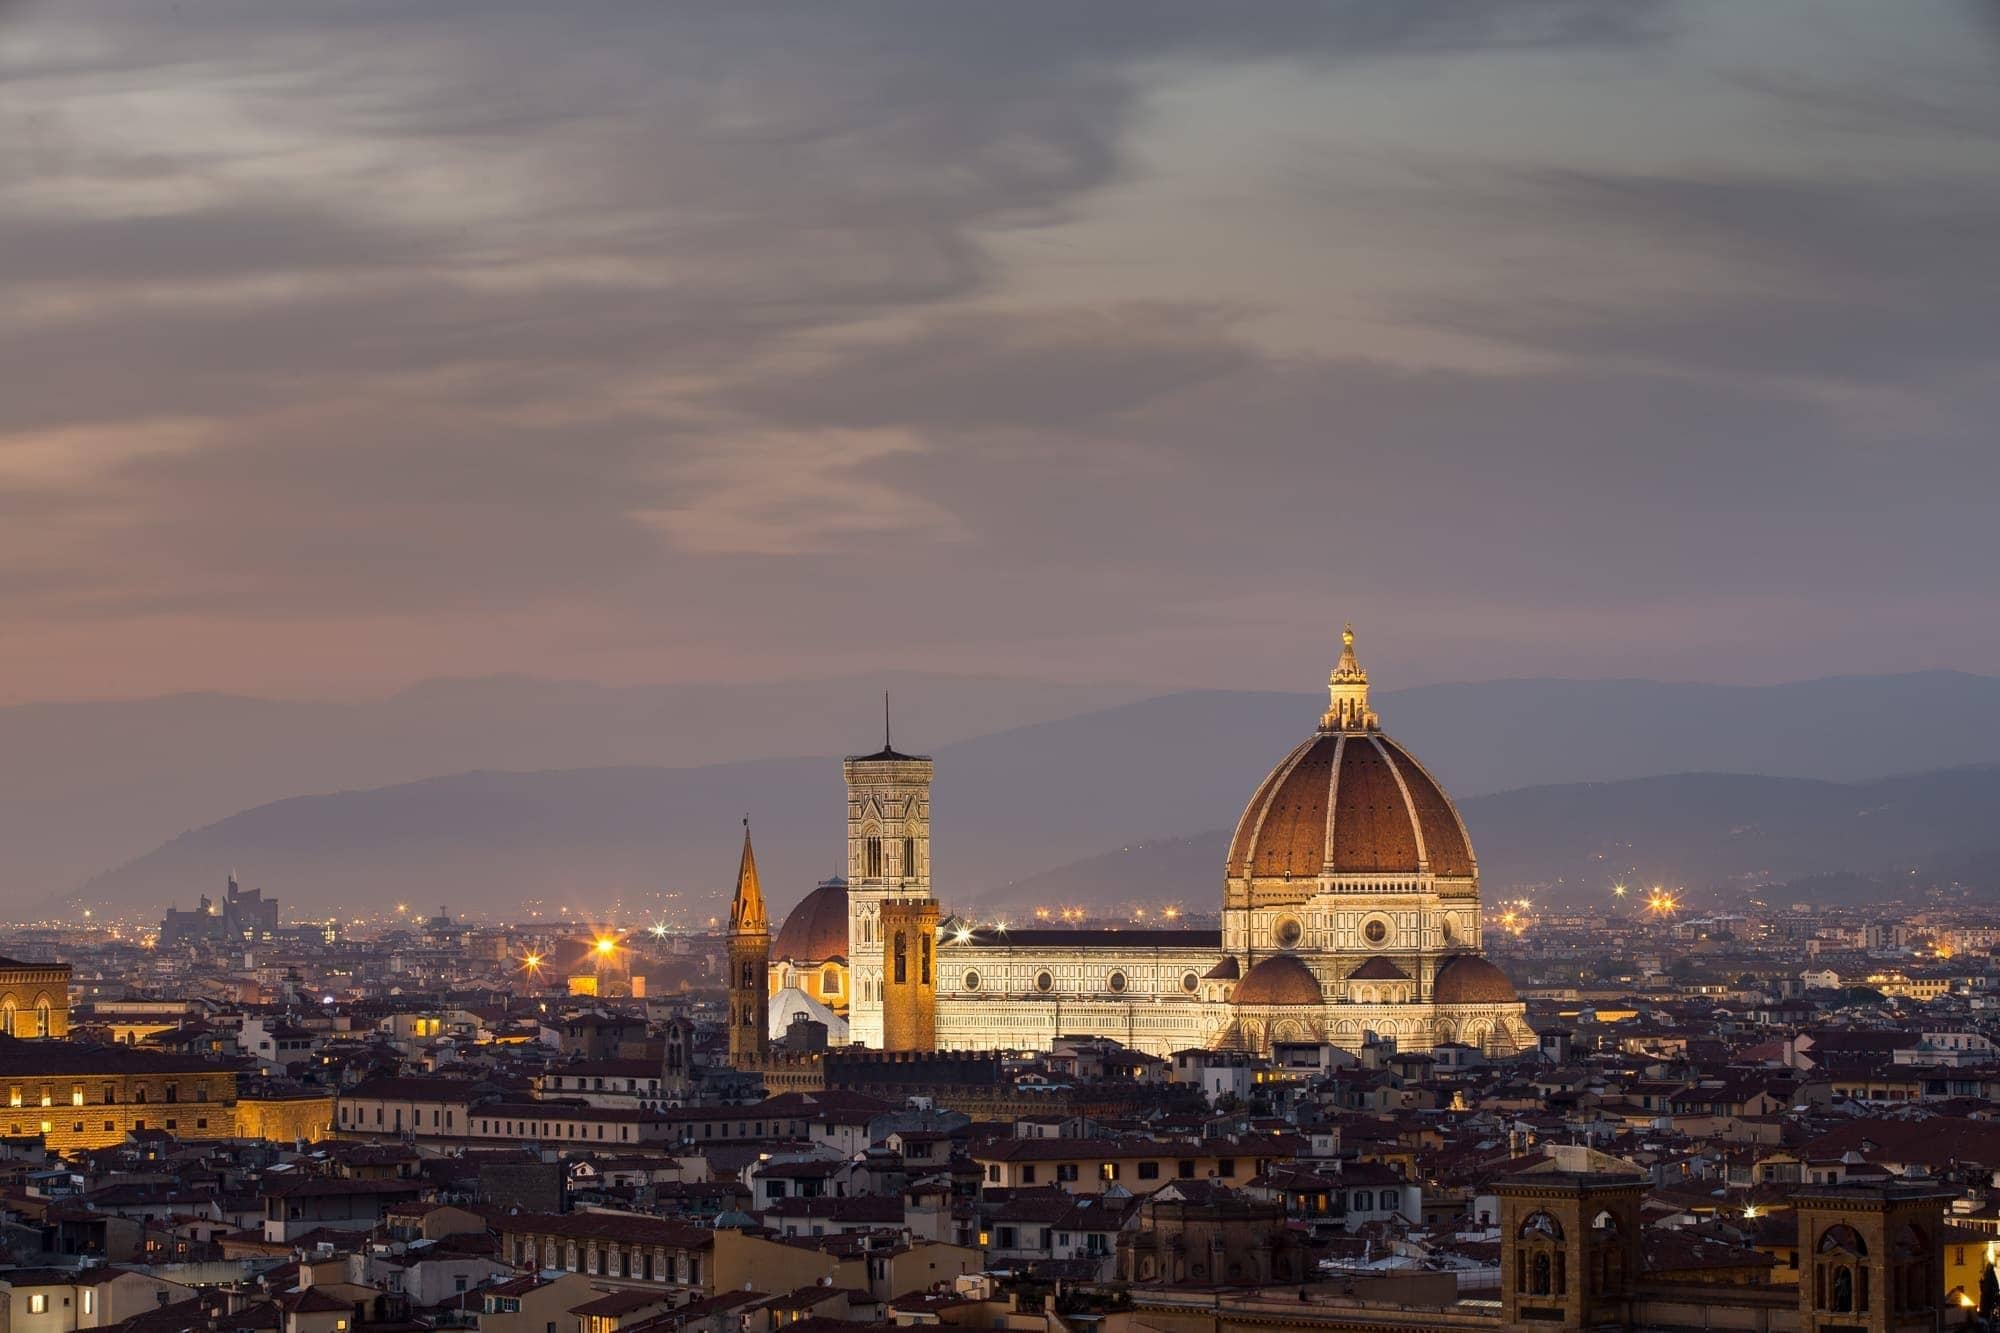 Florence Duomo sunset view image